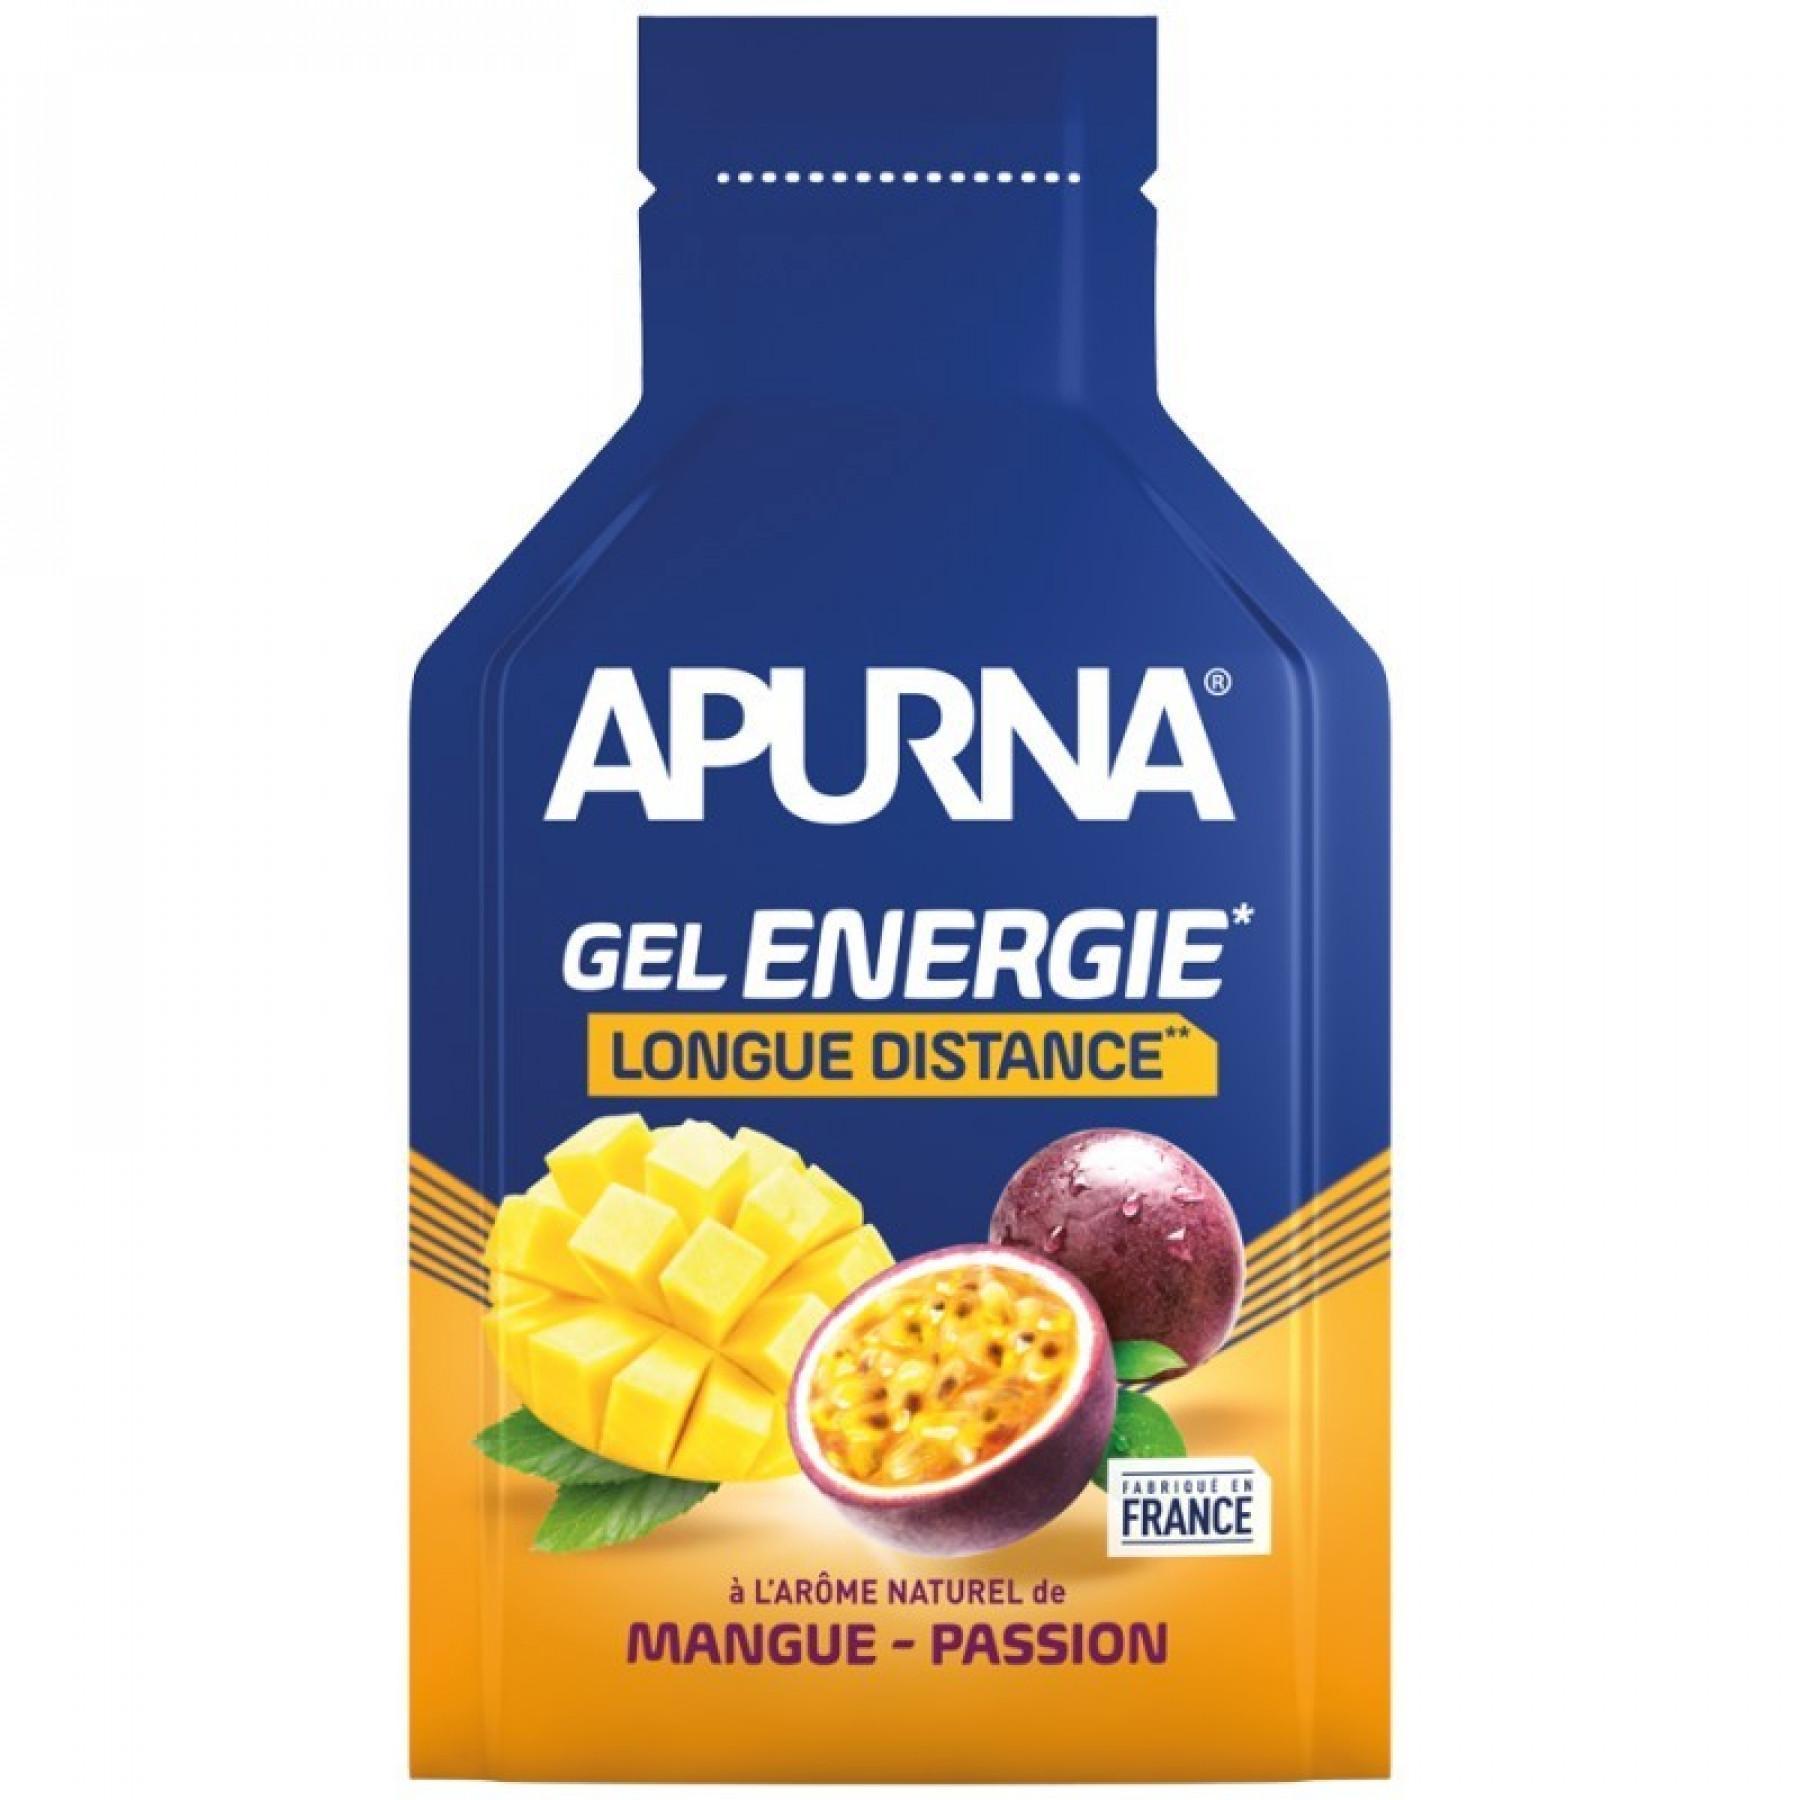 Batch of 24 gels Apurna Energie Mangue Passion - 35g